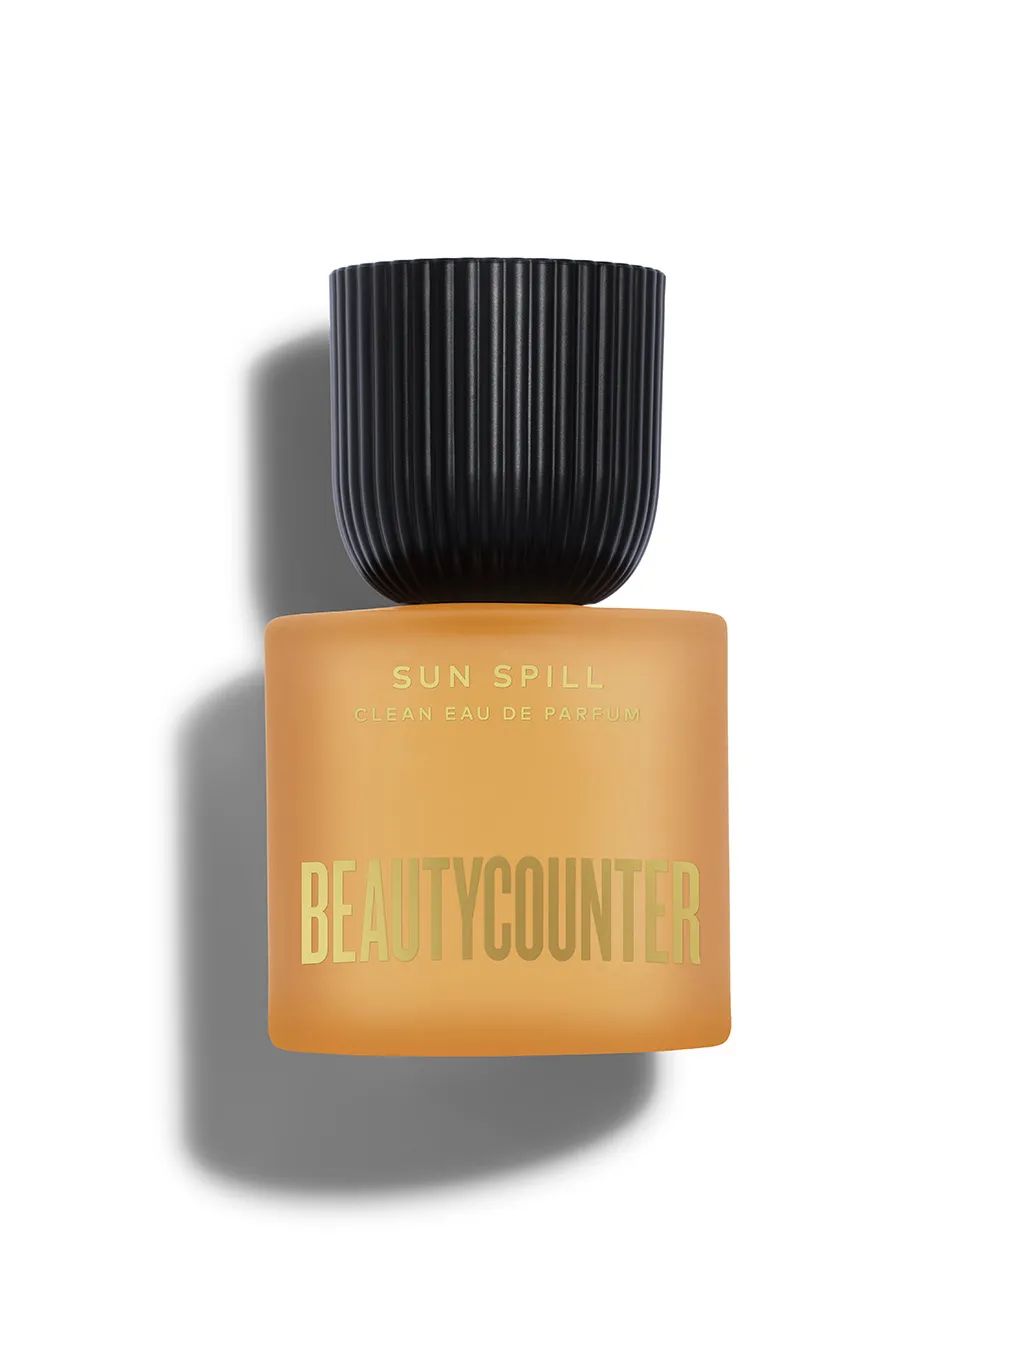 Sun Spill Clean Eau De Parfum - Beautycounter - Skin Care, Makeup, Bath and Body and more! | Beautycounter.com